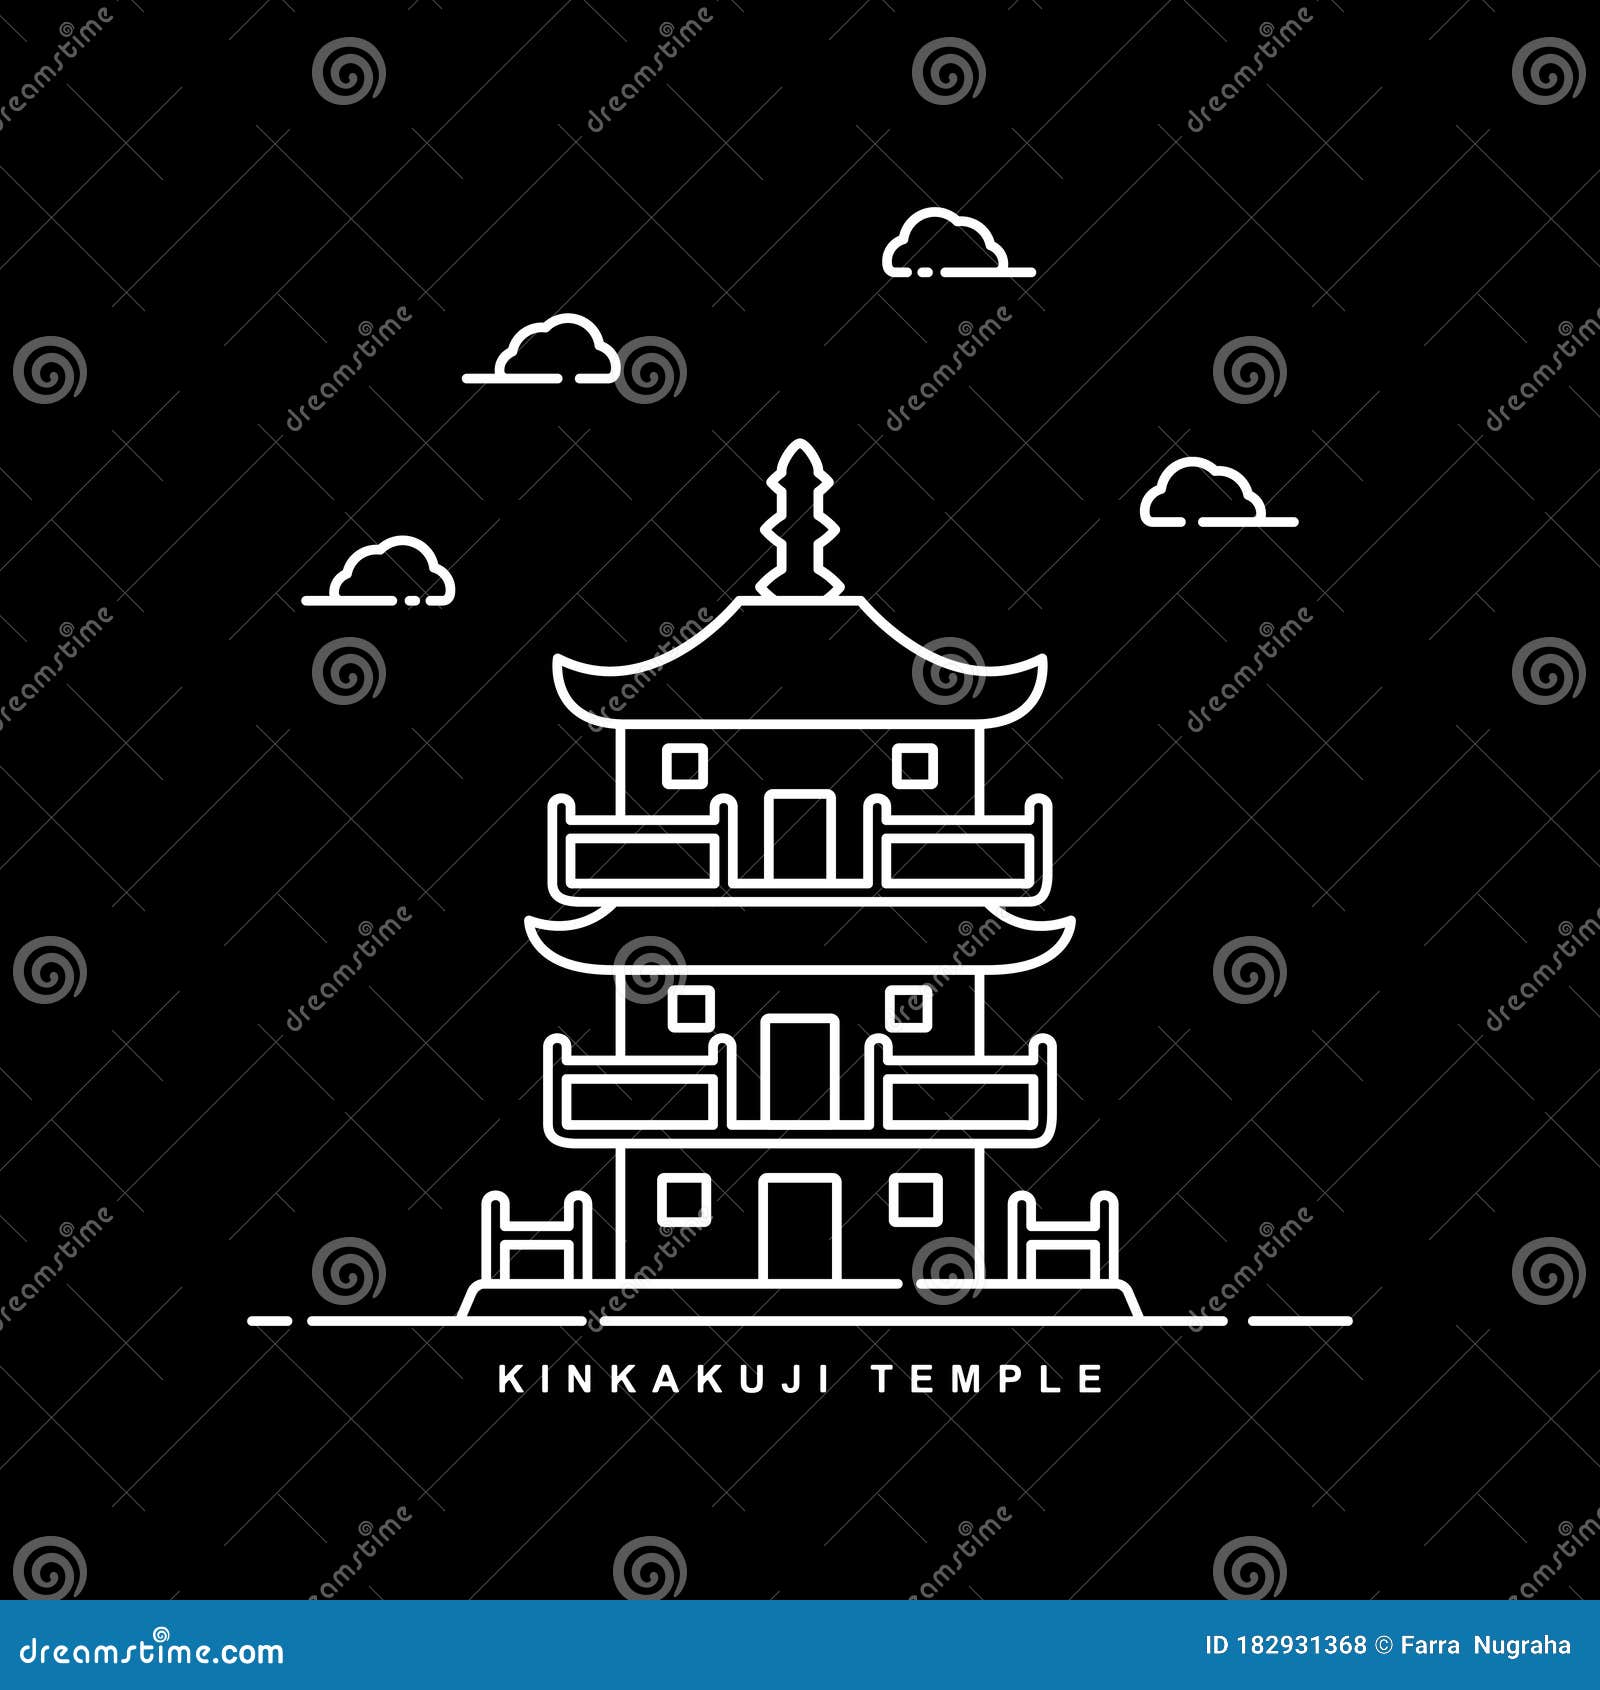 Kinkakuji Temple Illustration. Japan Landmark Building Stock Vector ...